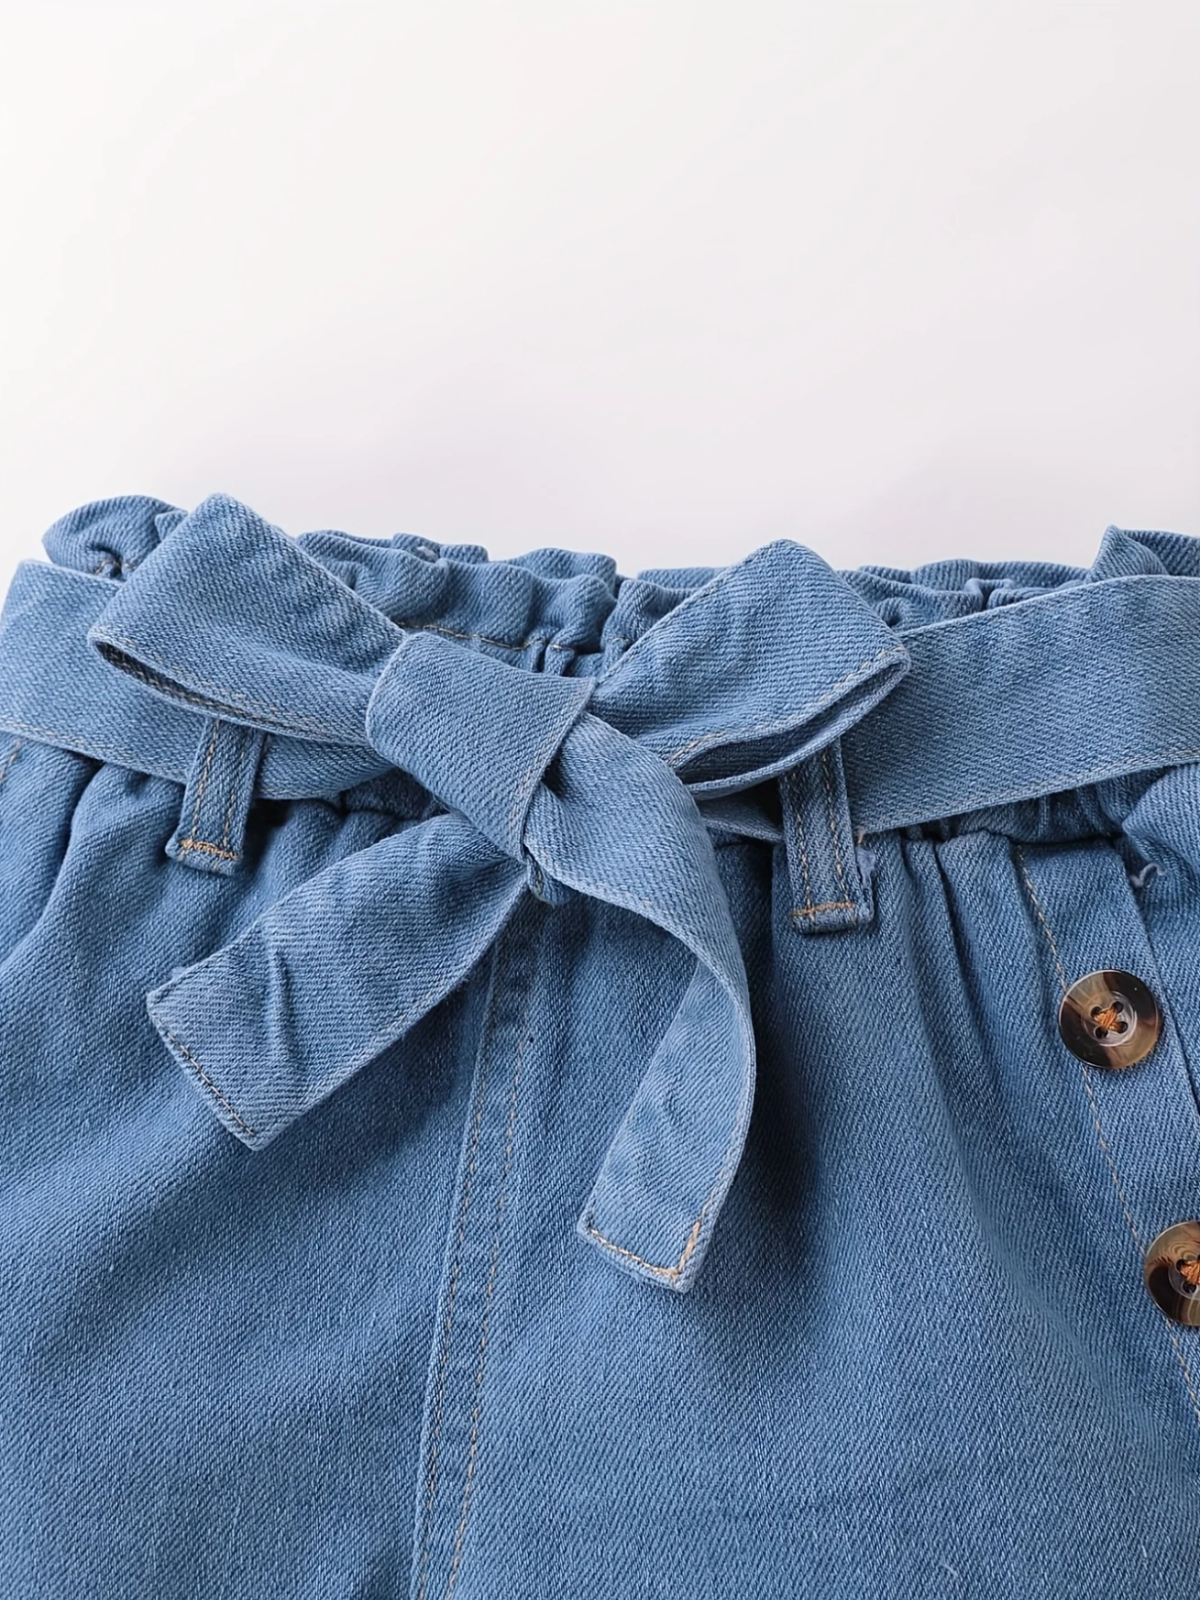 Mia Belle Girls Denim Paperbag Short Set | Girls Summer Outfits